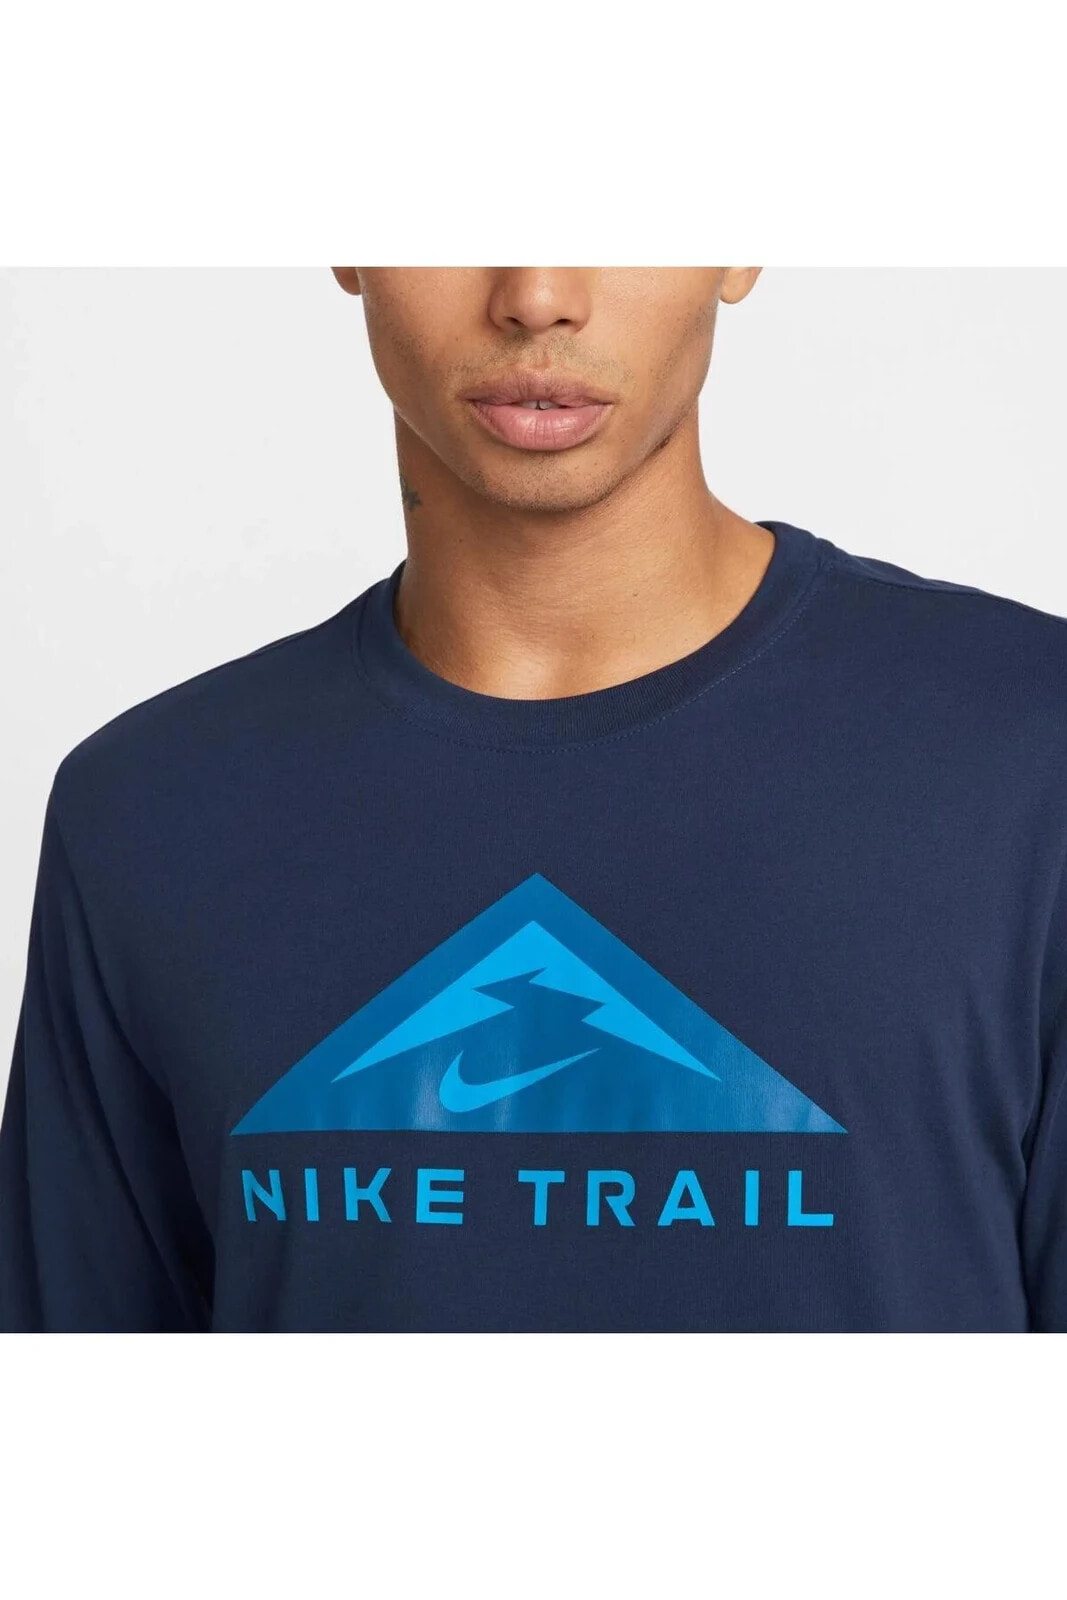 Antrenman Tişörtü Dri-Fit Trail - Mavi